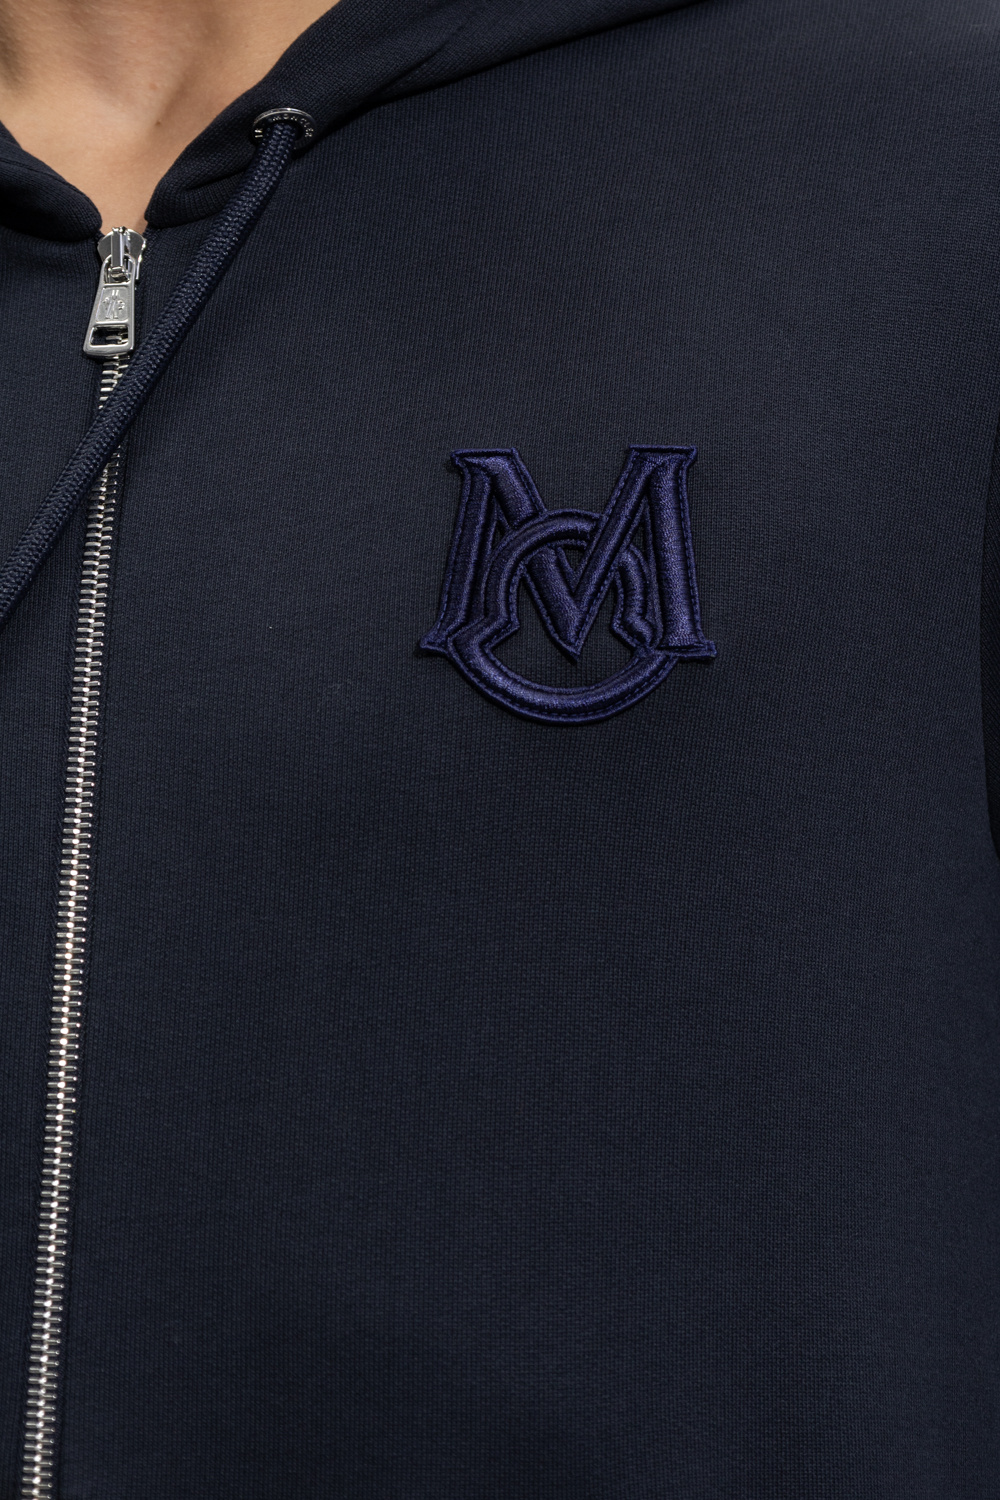 Moncler Monogram Zip-up Hoodie in Black for Men